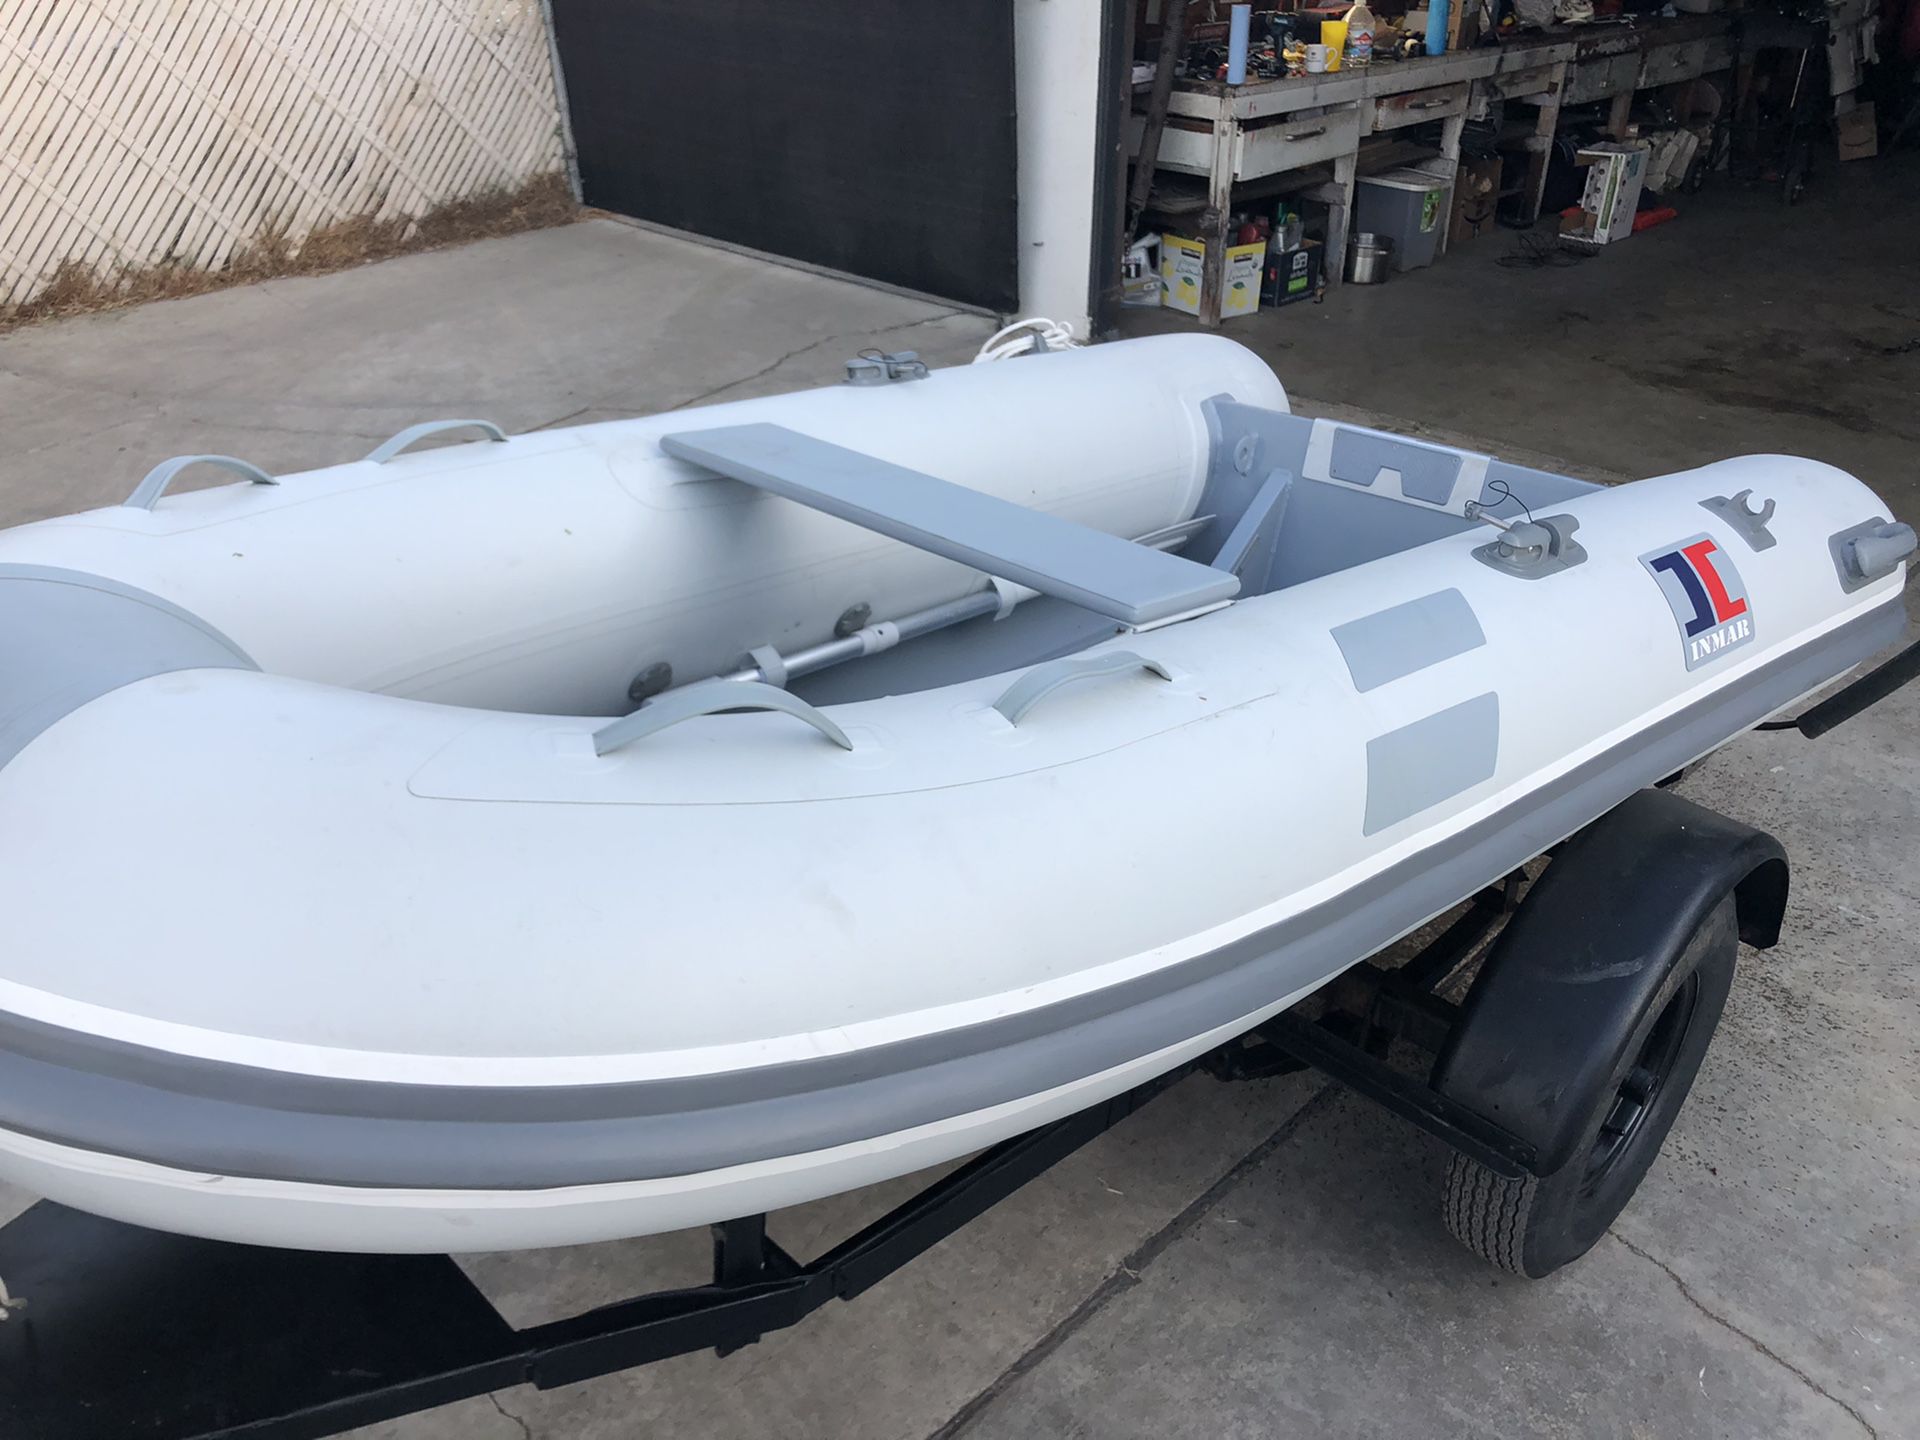 New 2019 INMAR Rigid Inflatable Boat (RIB) w/ Trailer $1900 OBO